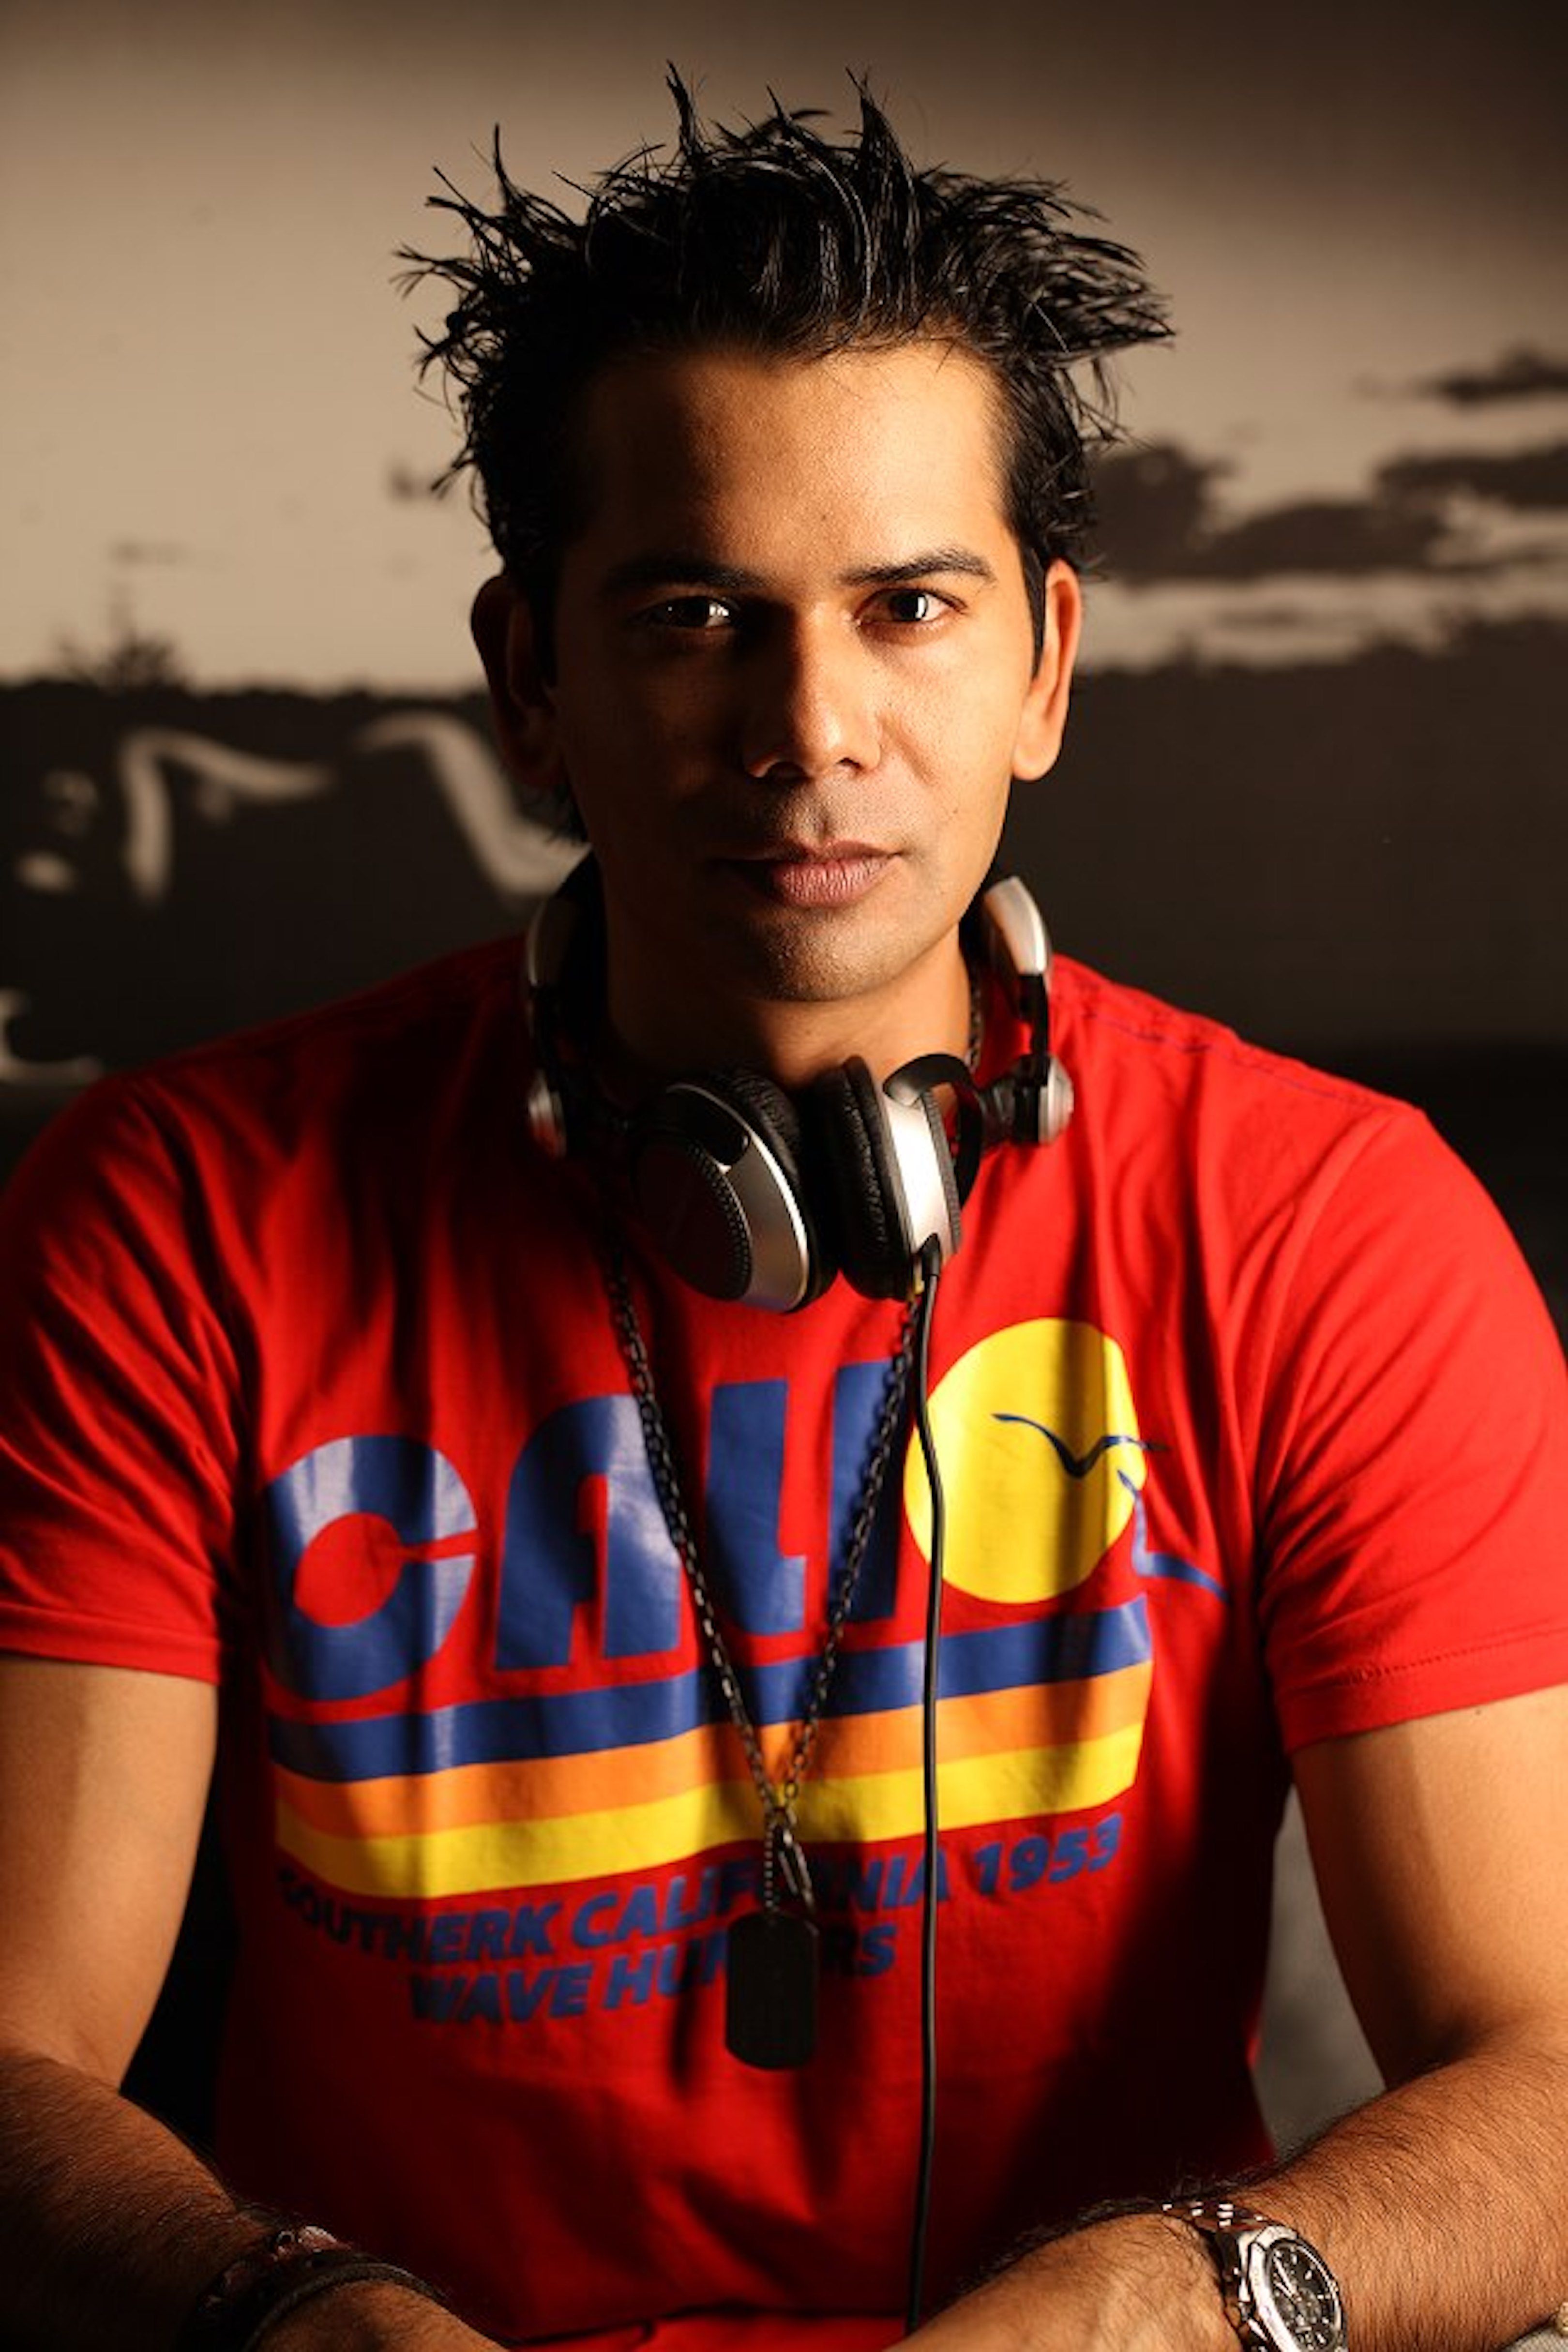 DJ Rohit Profile Pic